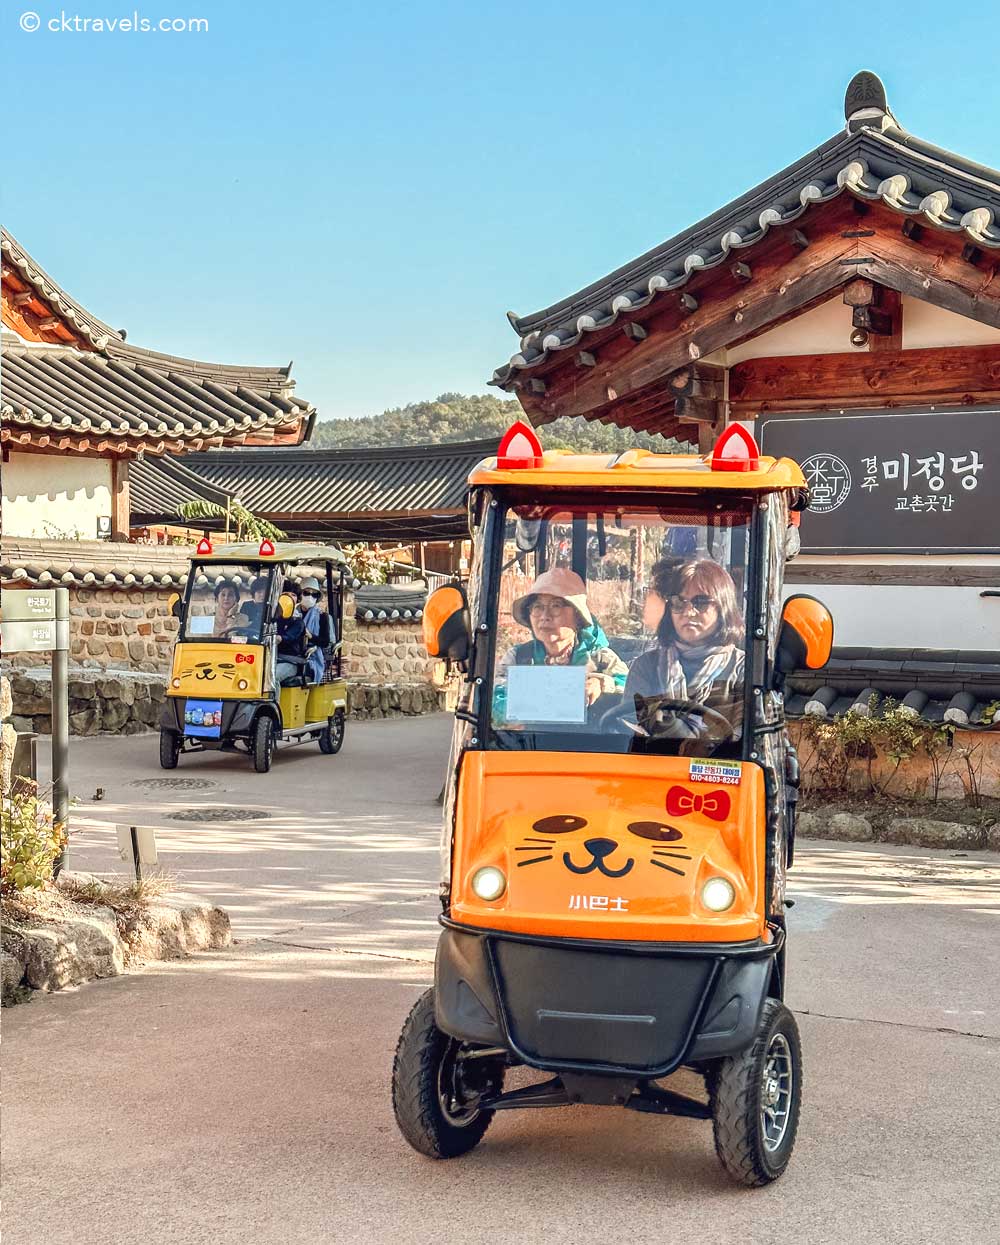 golf buggy at Gyeongju Gyochon Traditional Village